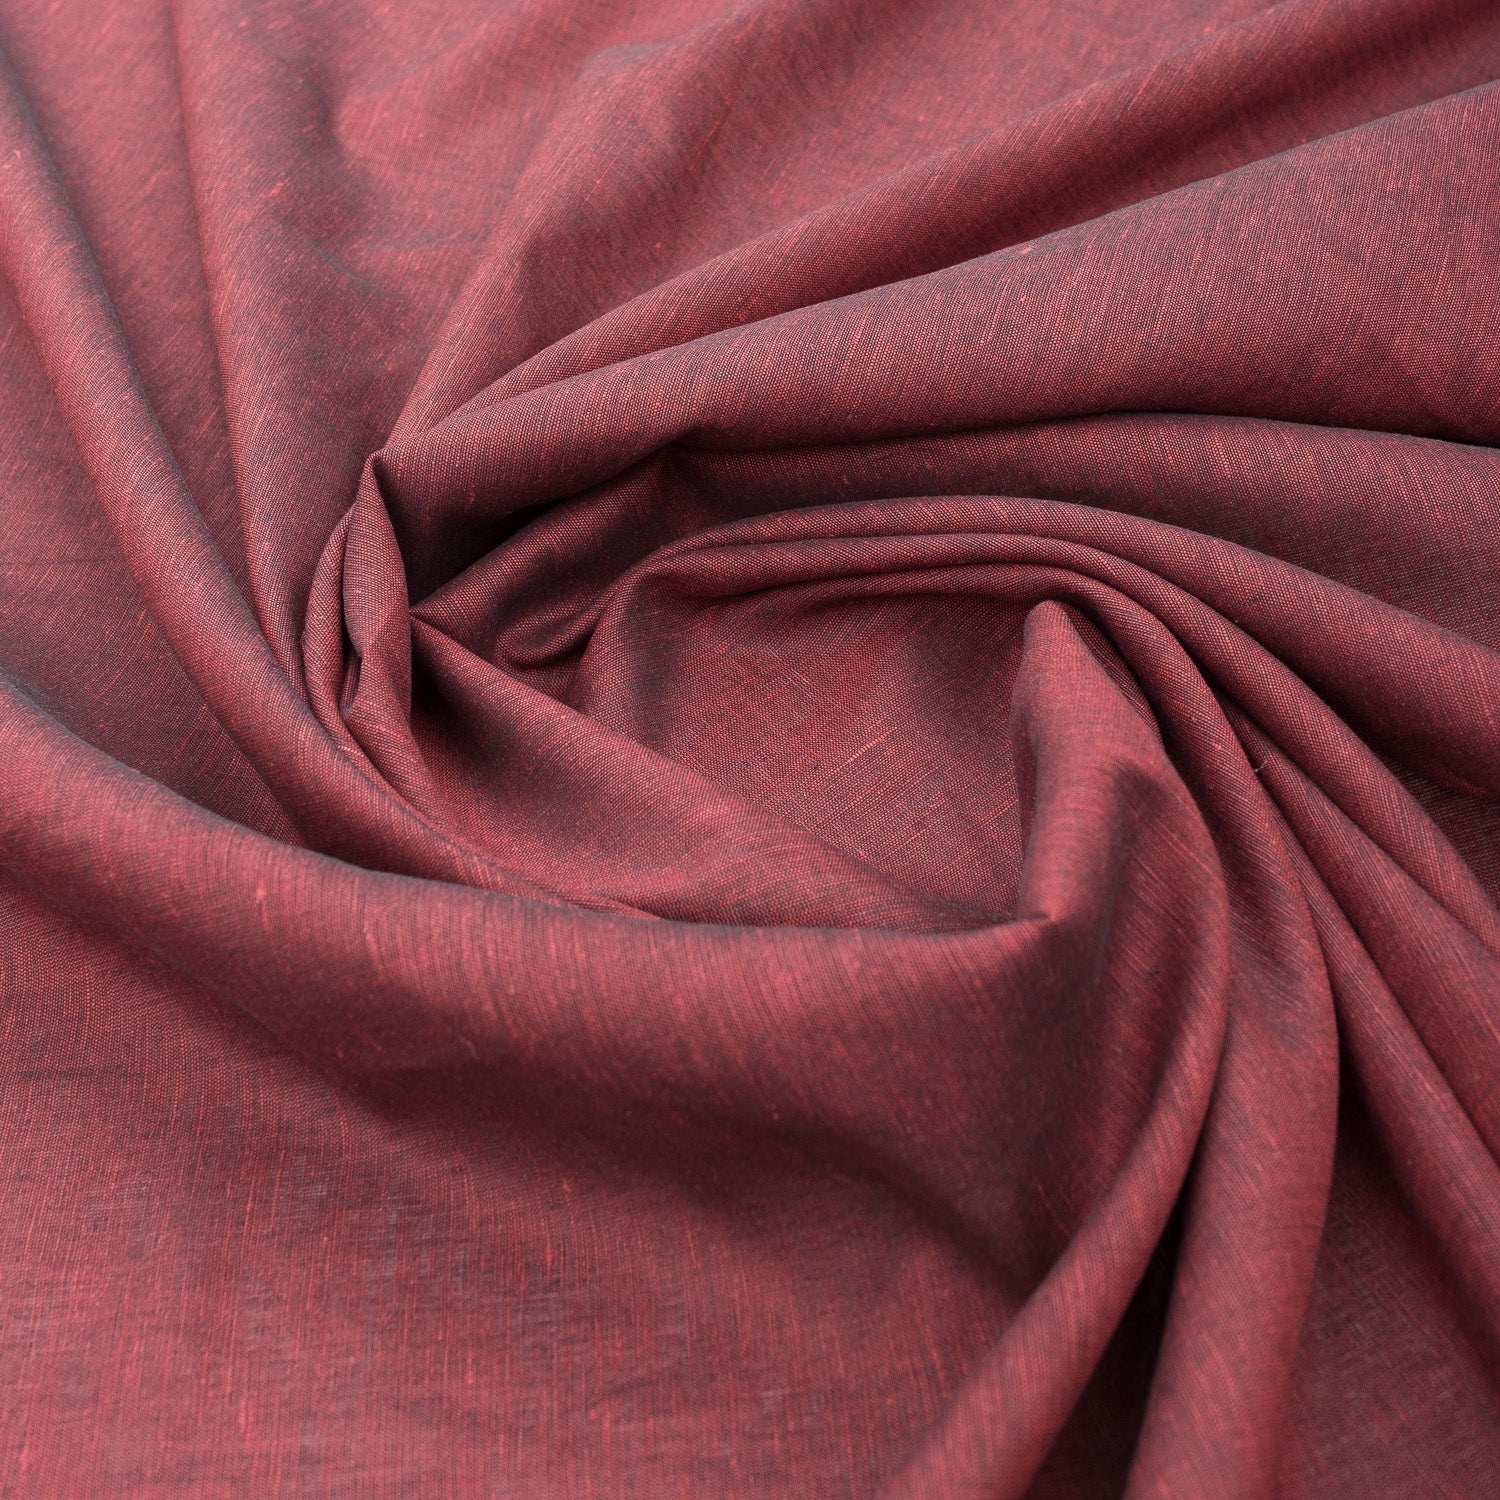 Cotton Linen Blend Fabric Properties Online | head.hesge.ch